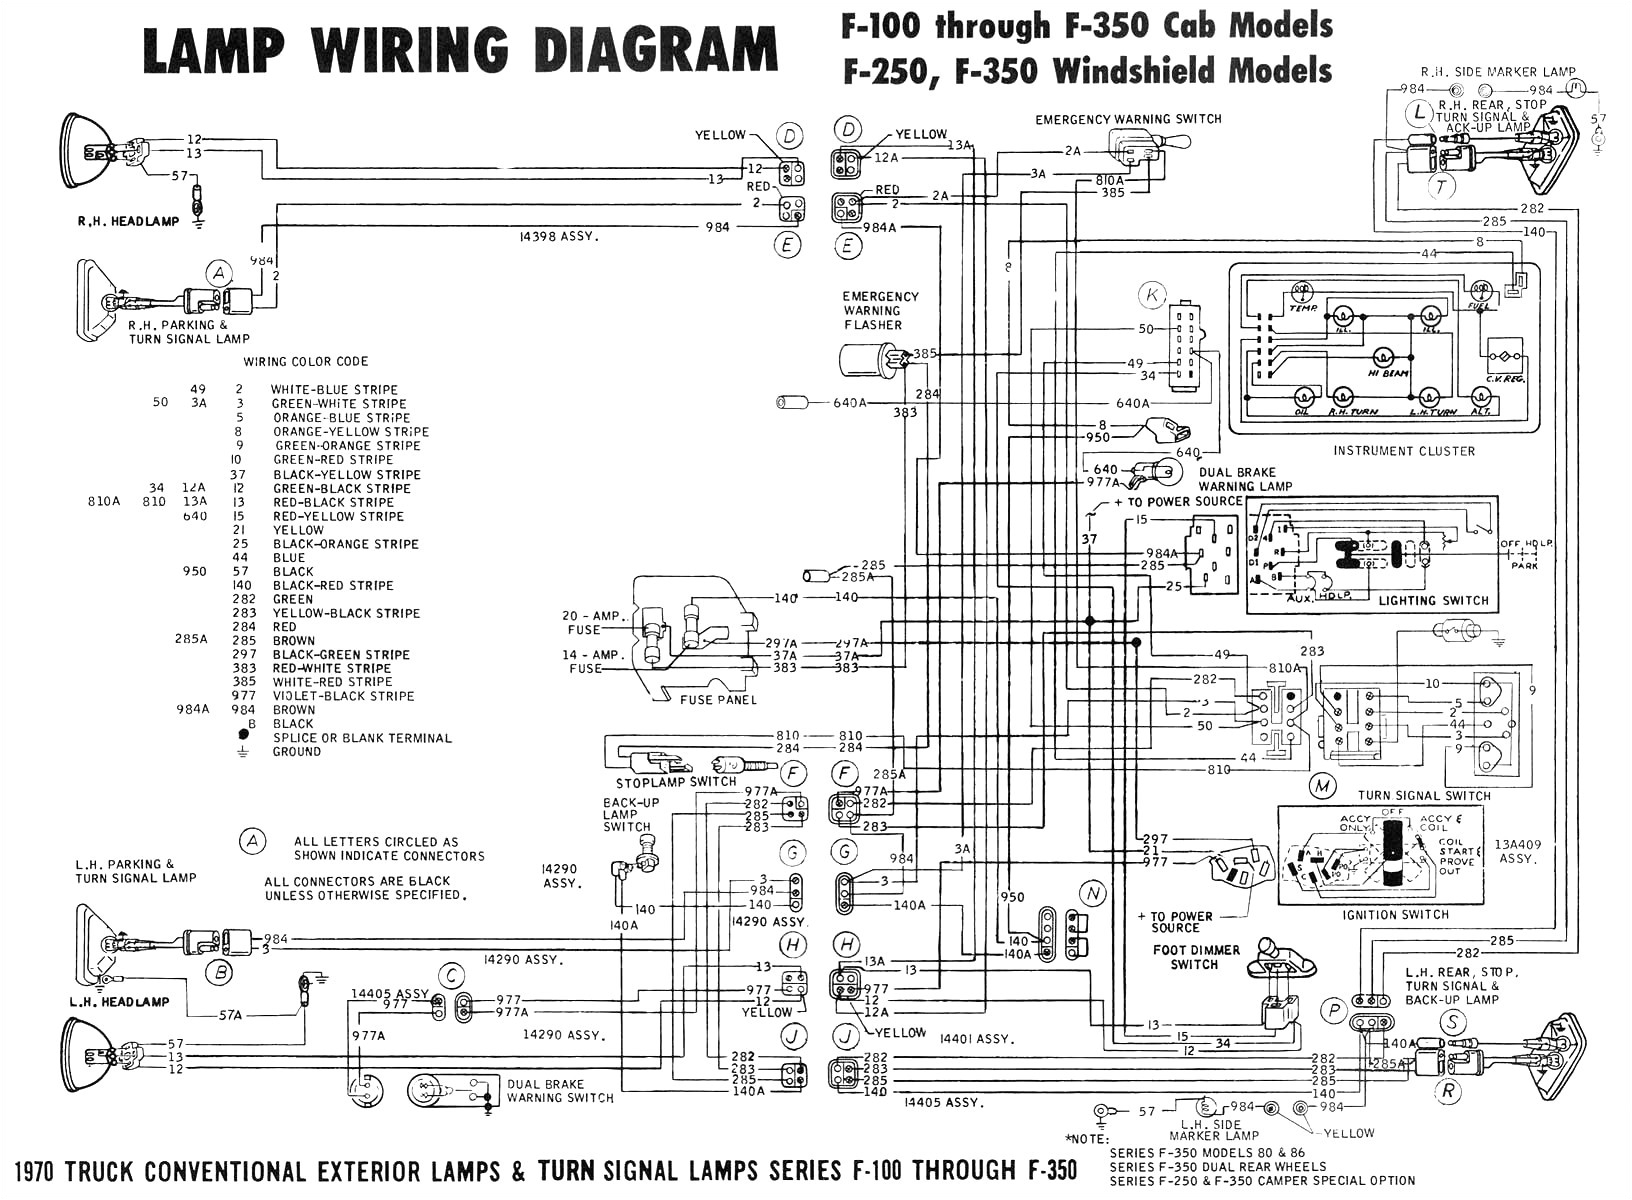 1988 ford Thunderbird Wiring Diagram Wiring Diagram for 1986 ford Thunderbird Wiring Diagram Article